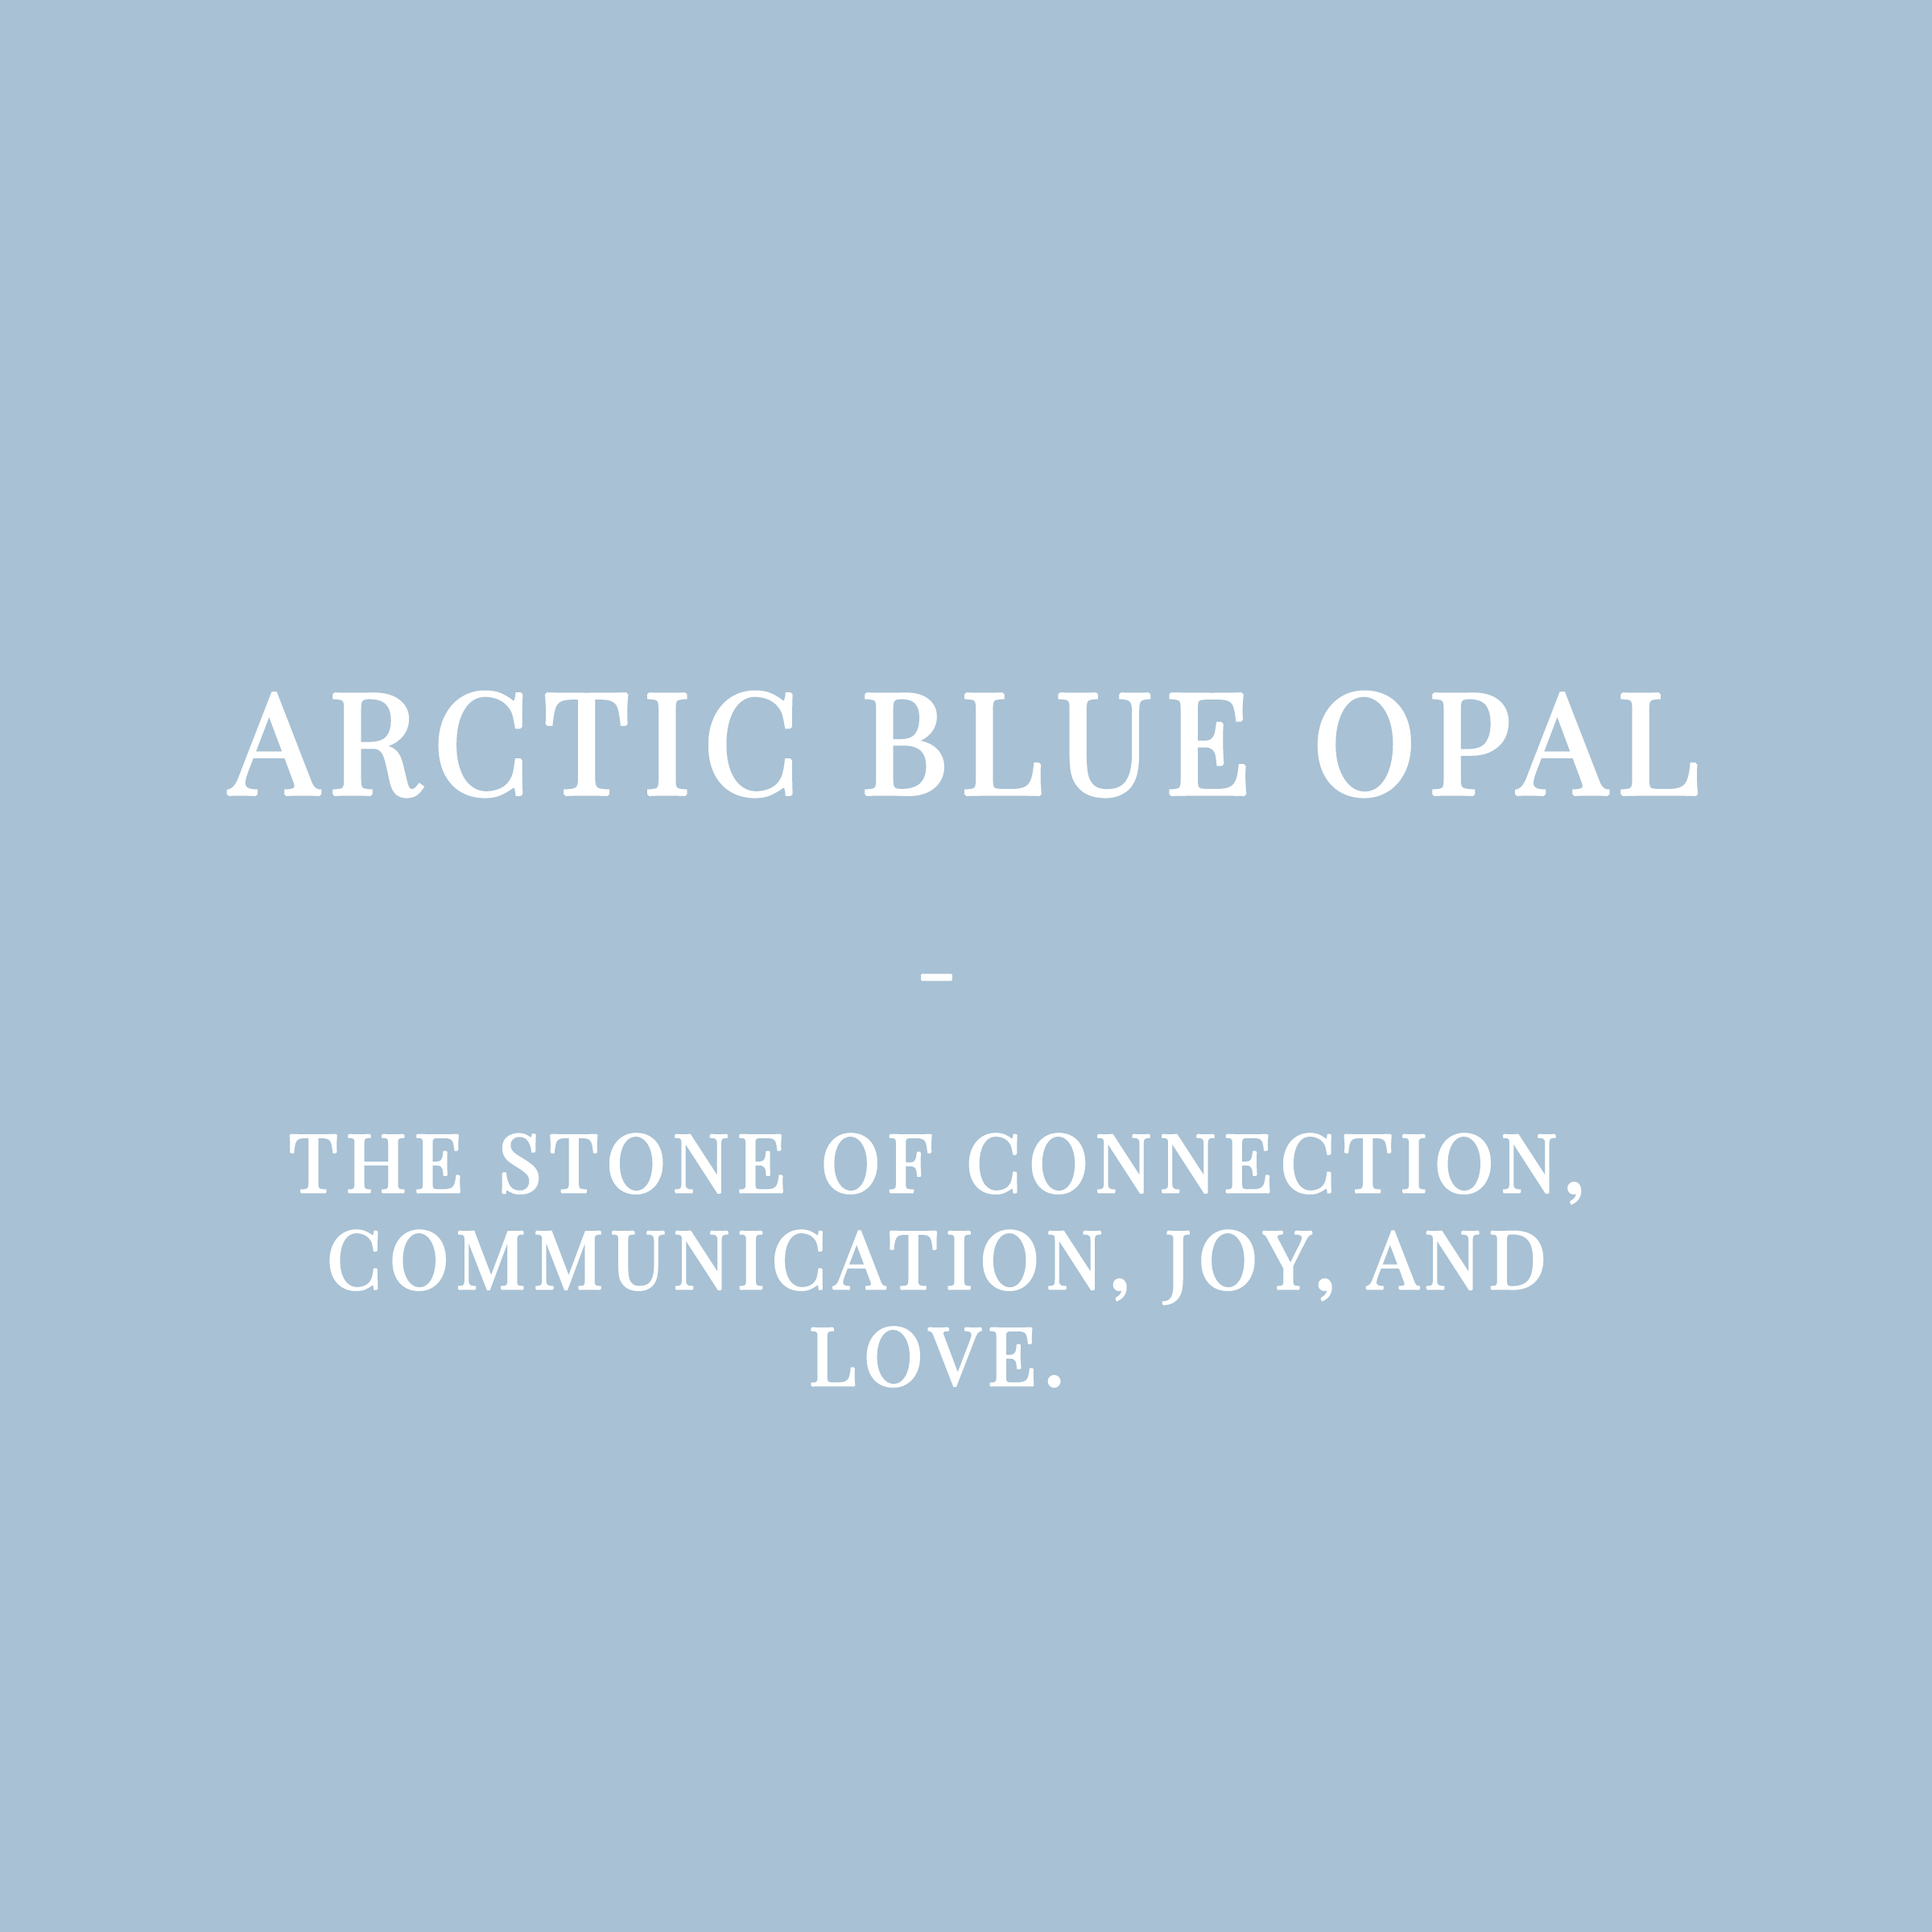 Arctic Blue opal